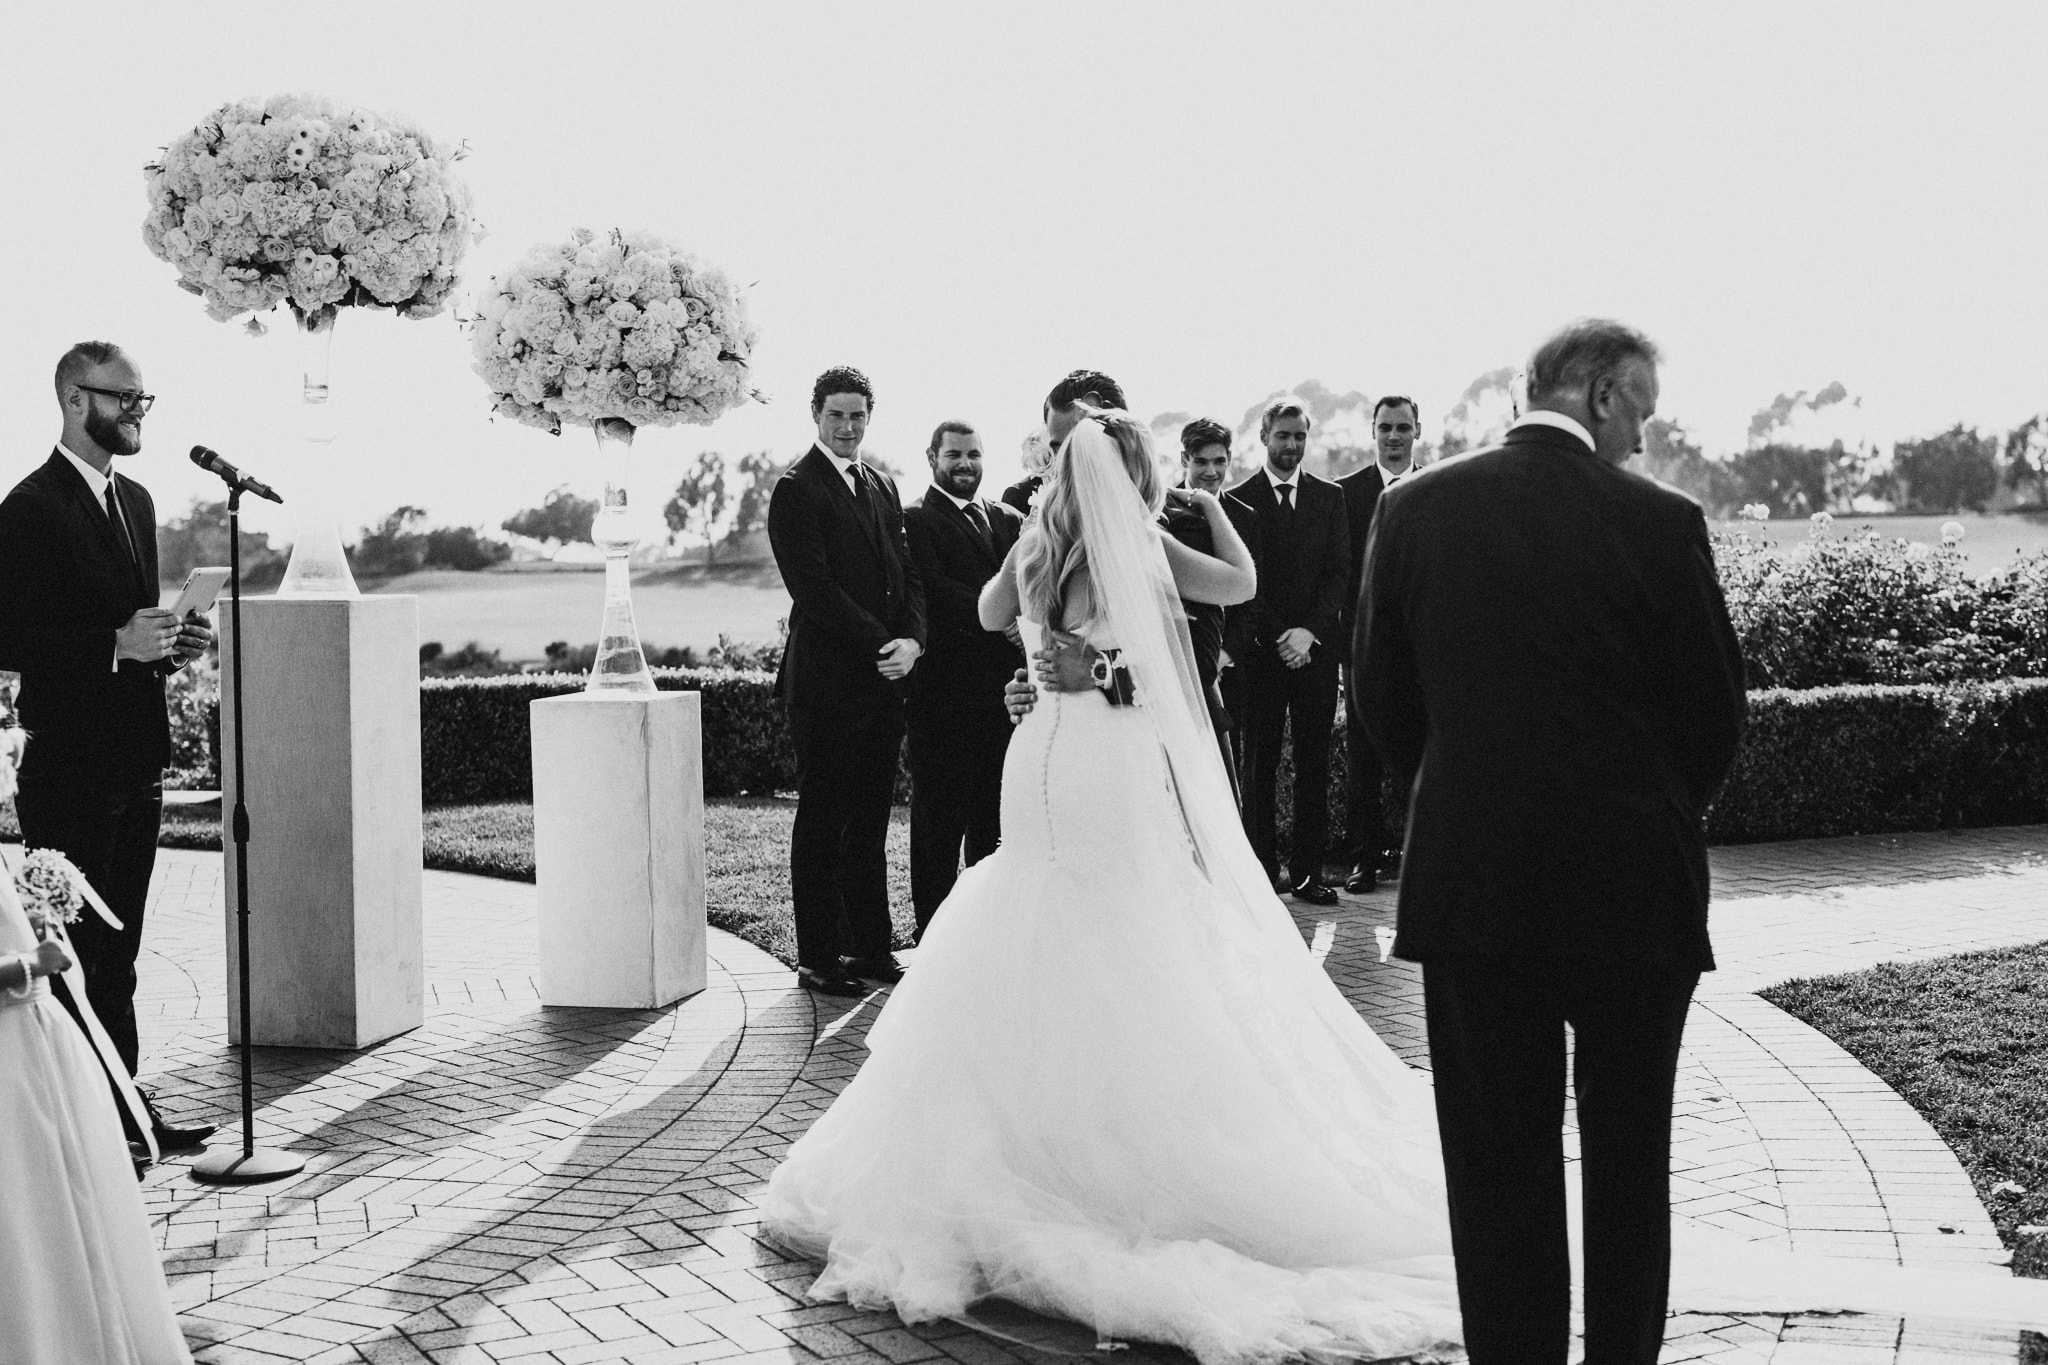 A groom hugs his bride at an outdoor wedding ceremony in Orange County, California.